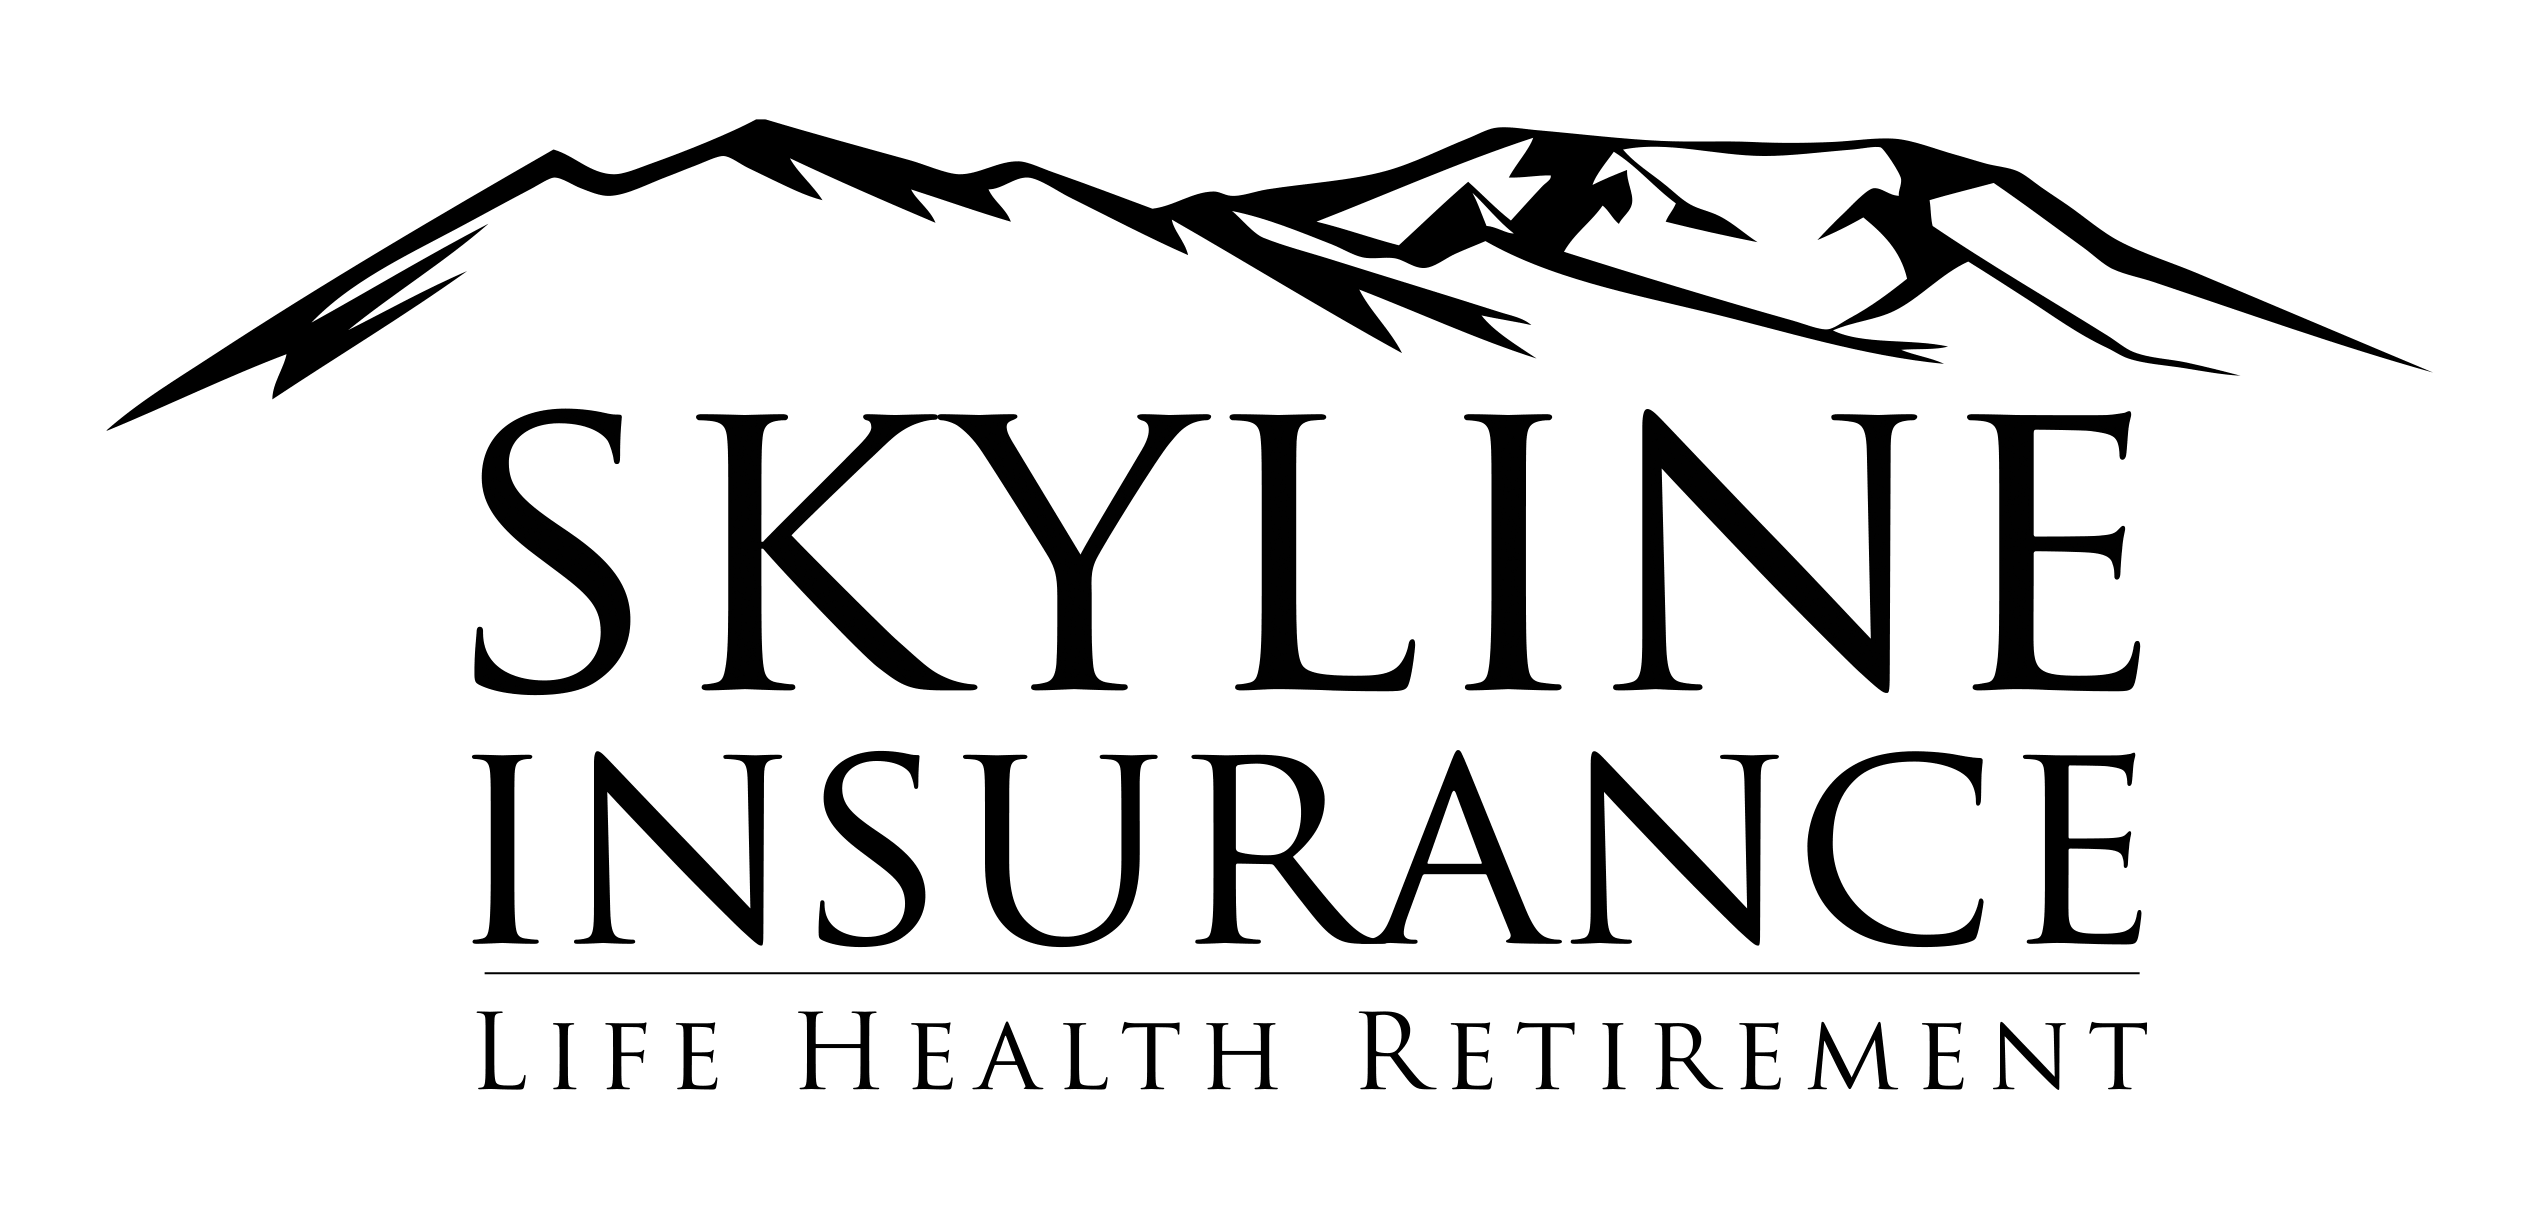 Skyline Insurance Agency Inc Logo